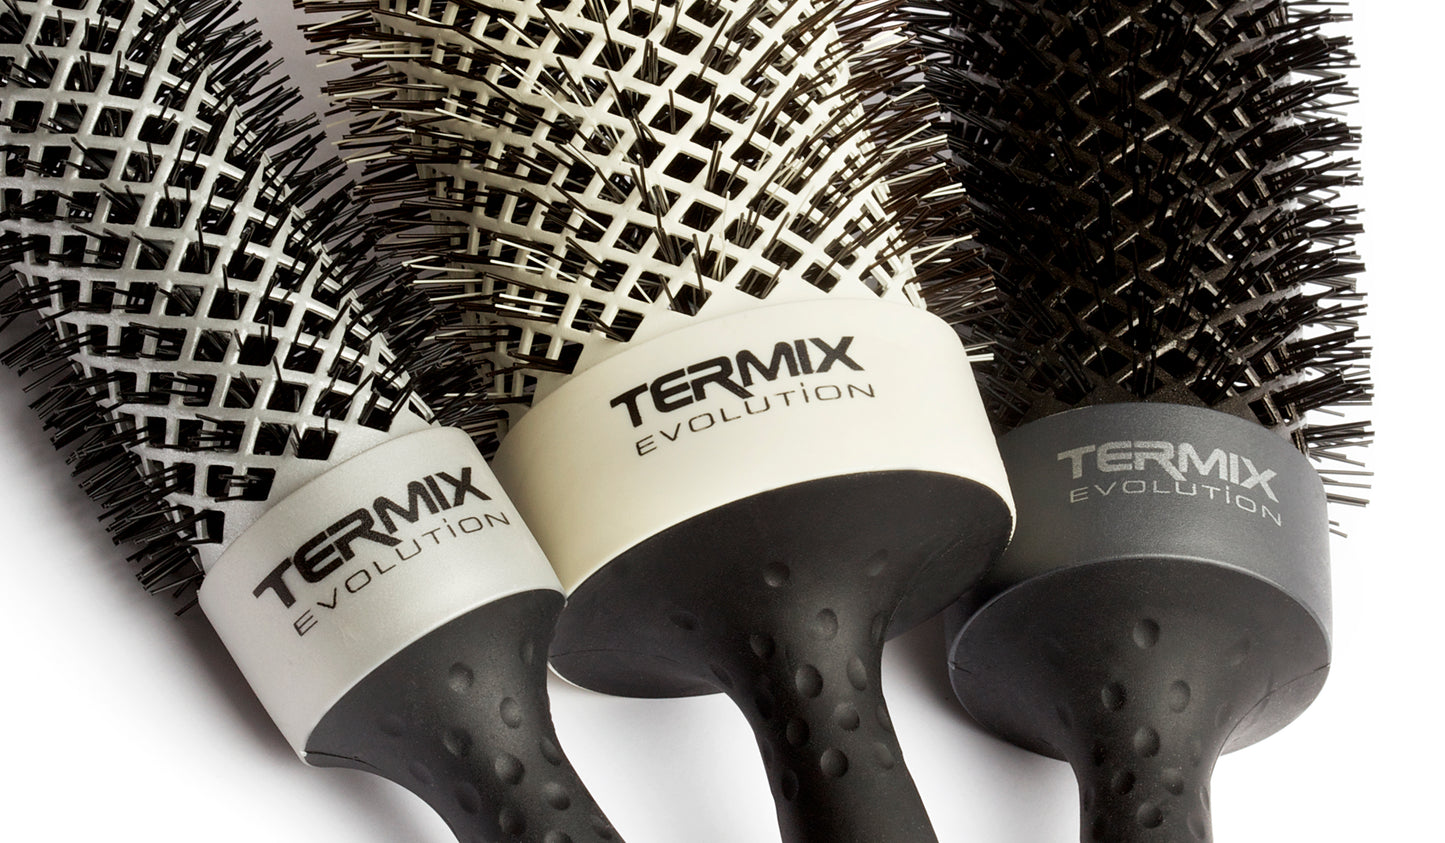 Termix Evolution Styling Brush 28mm